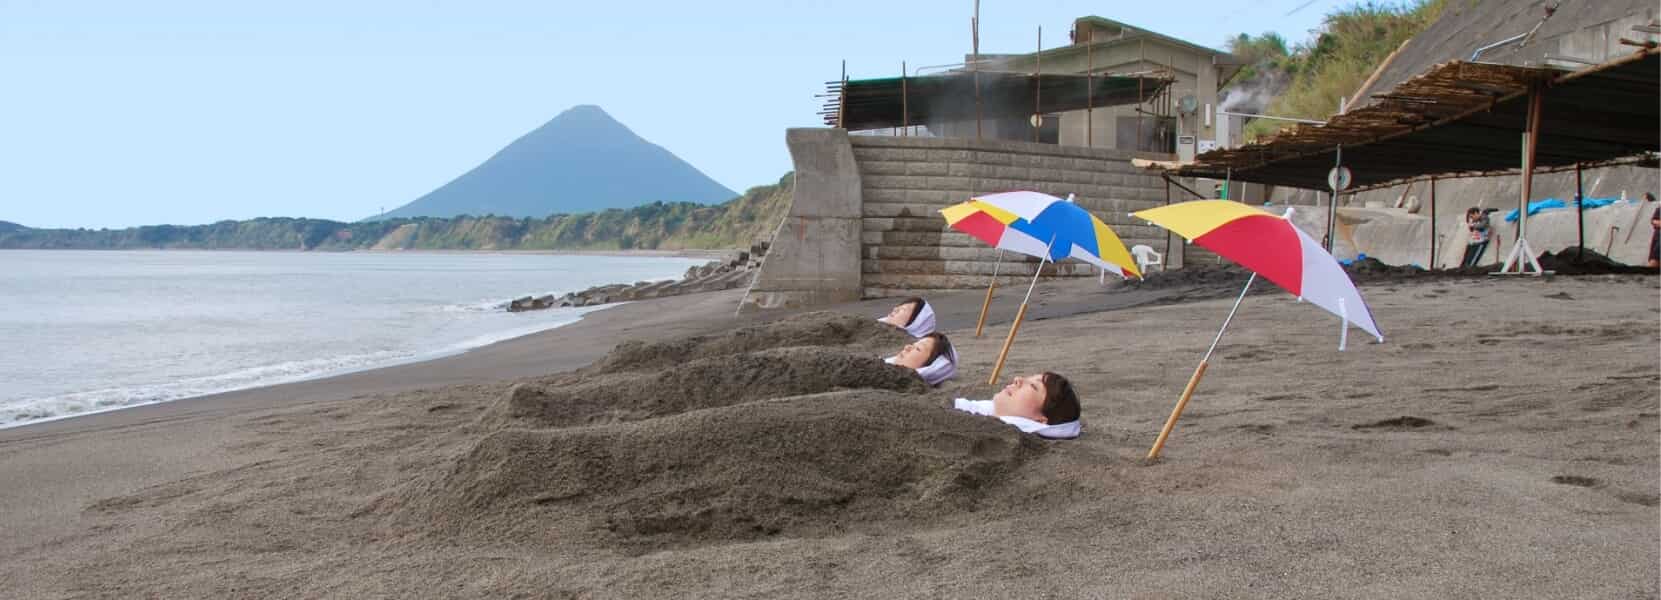 Sand Bath at Healthy Land Ibusuki Japan